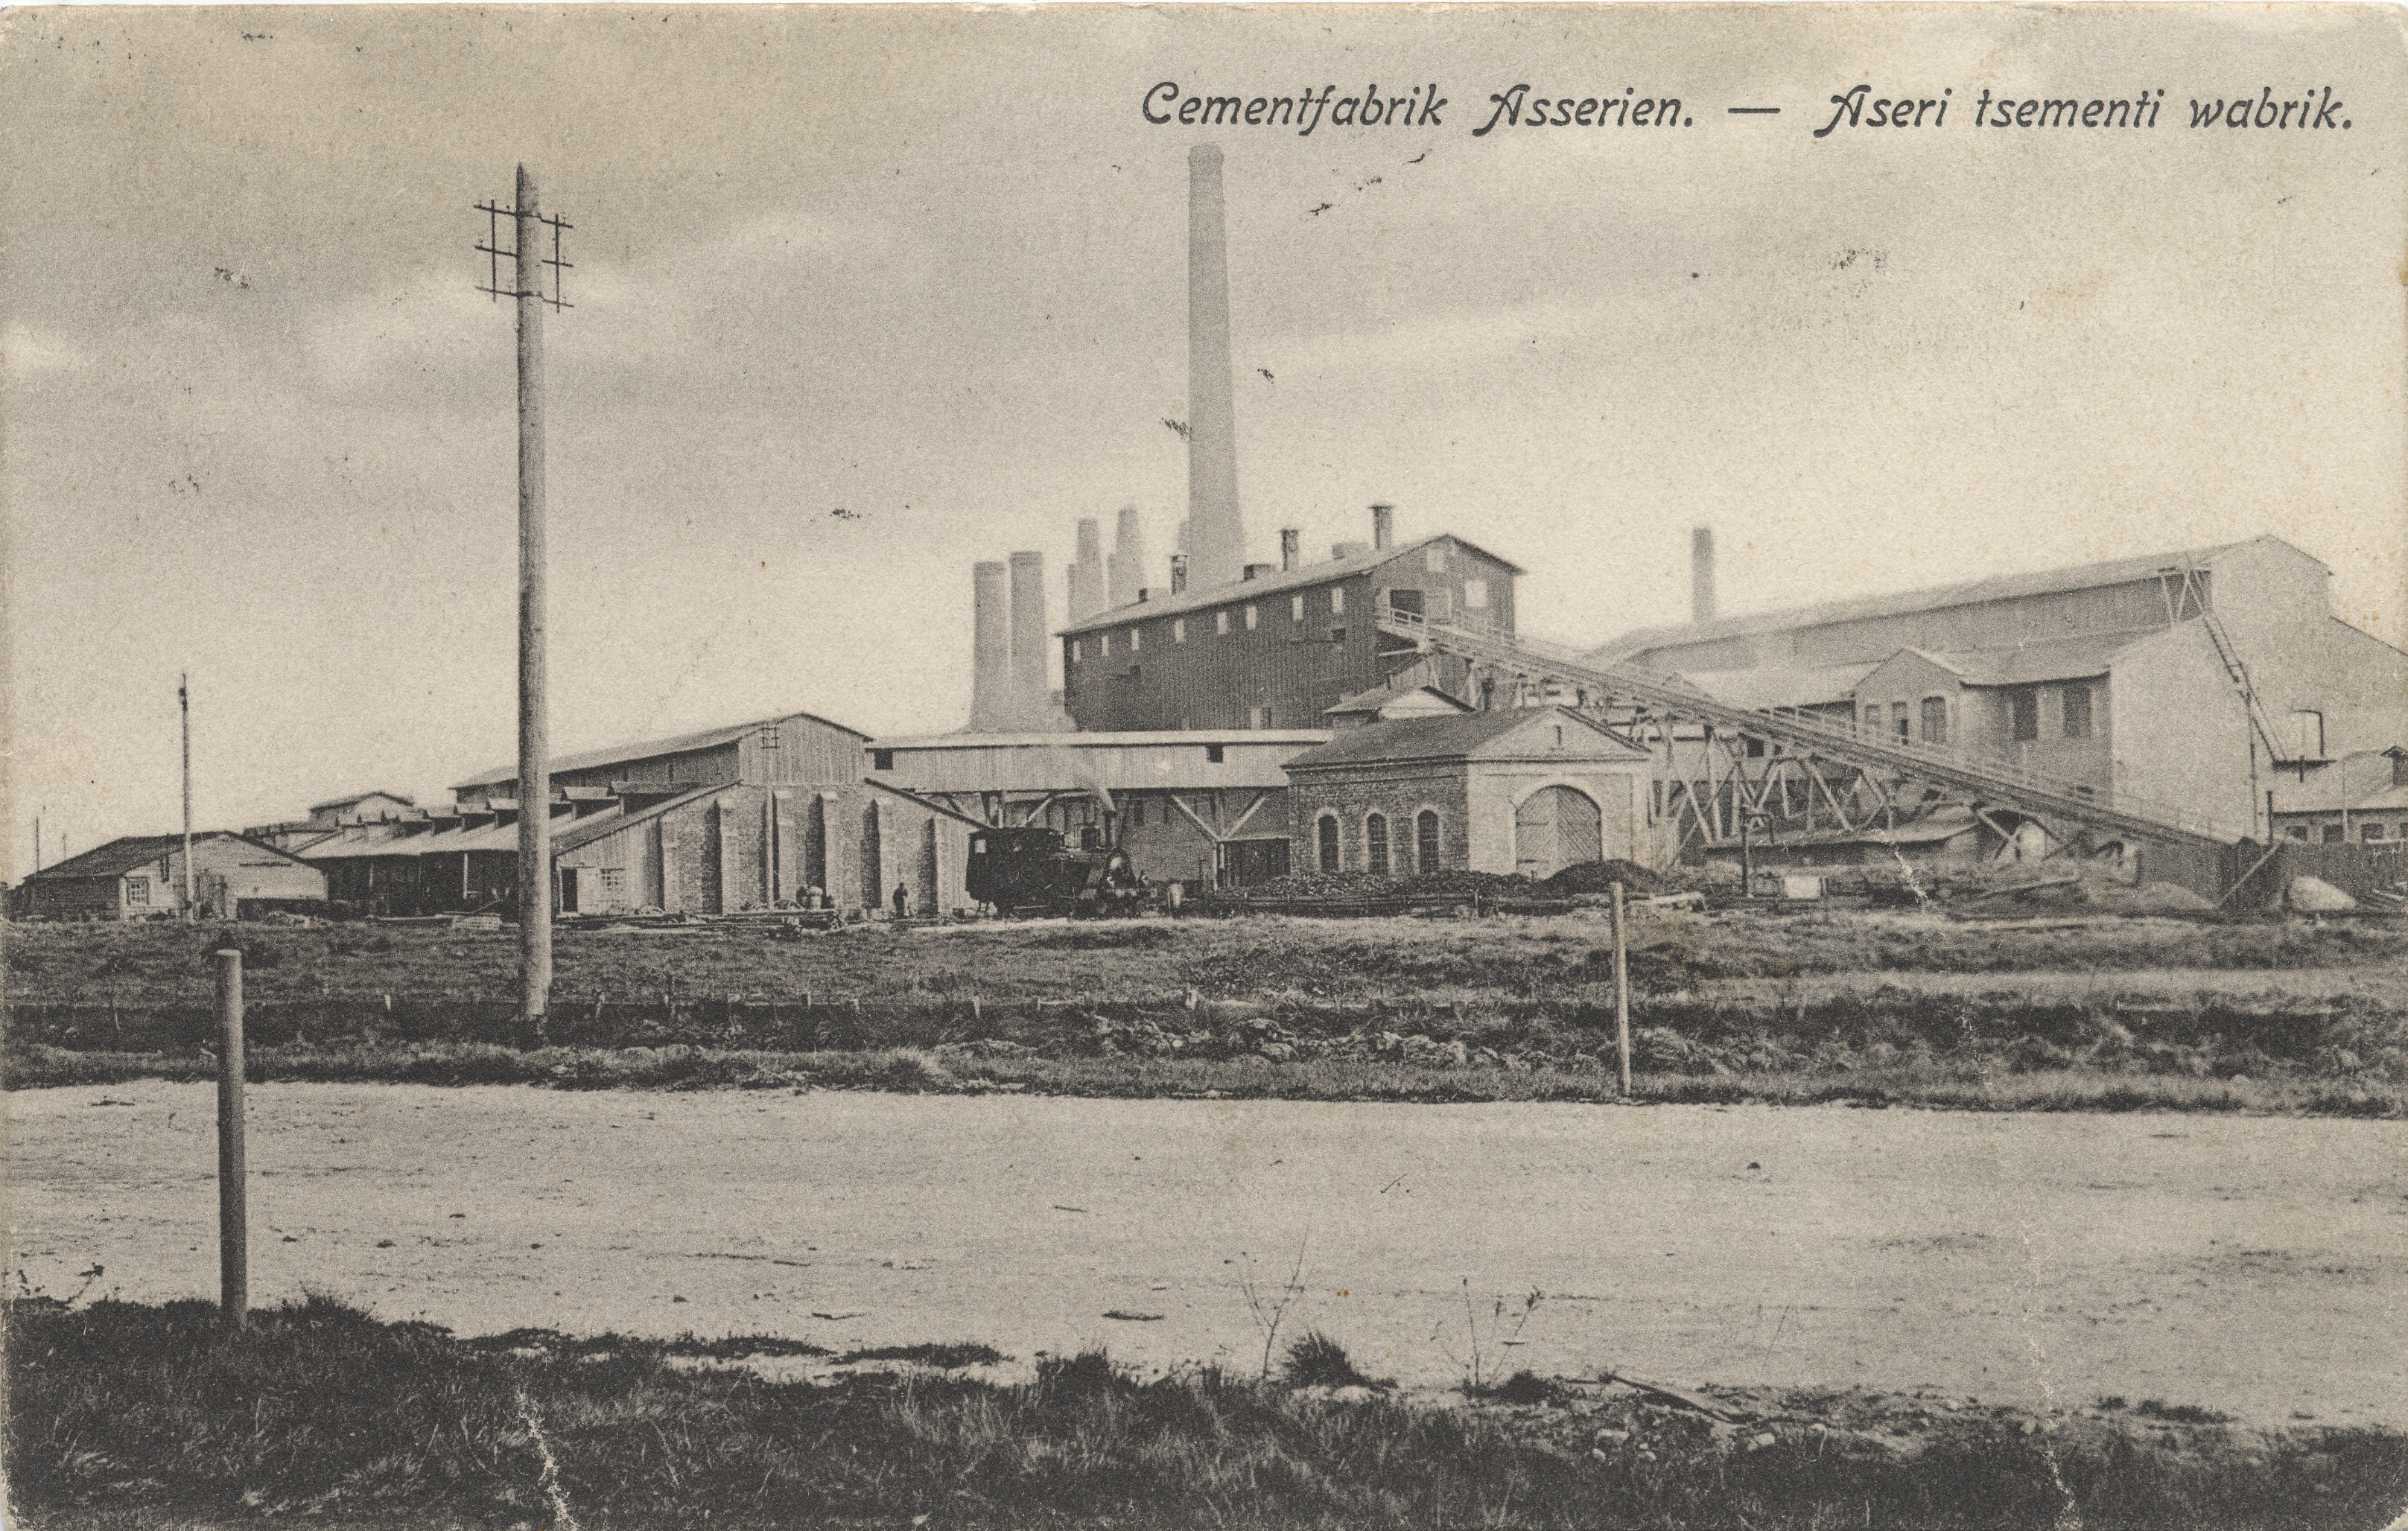 Cementfabrik Asserien : Aseri cement wabrik